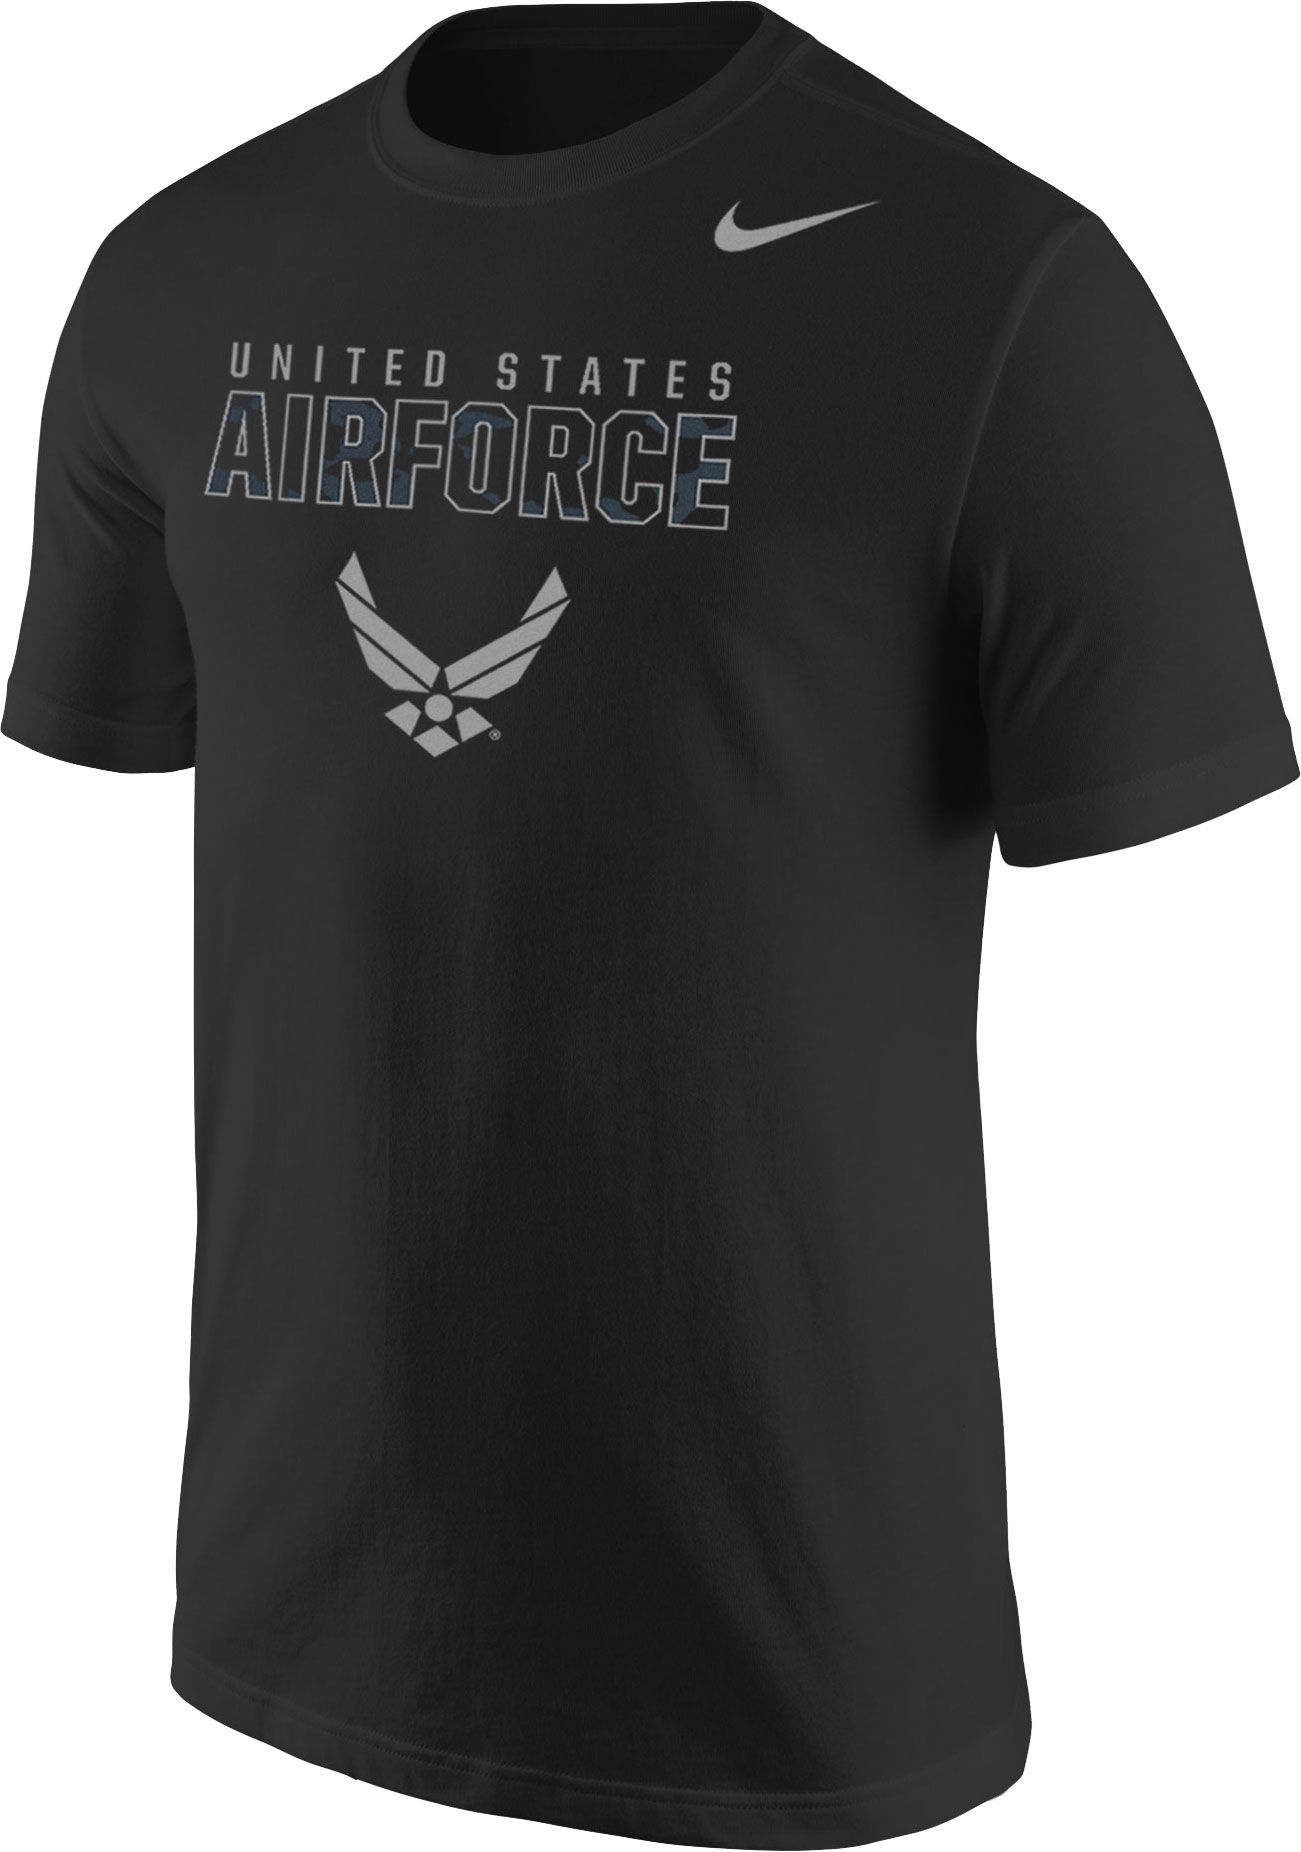 air force apparel nike